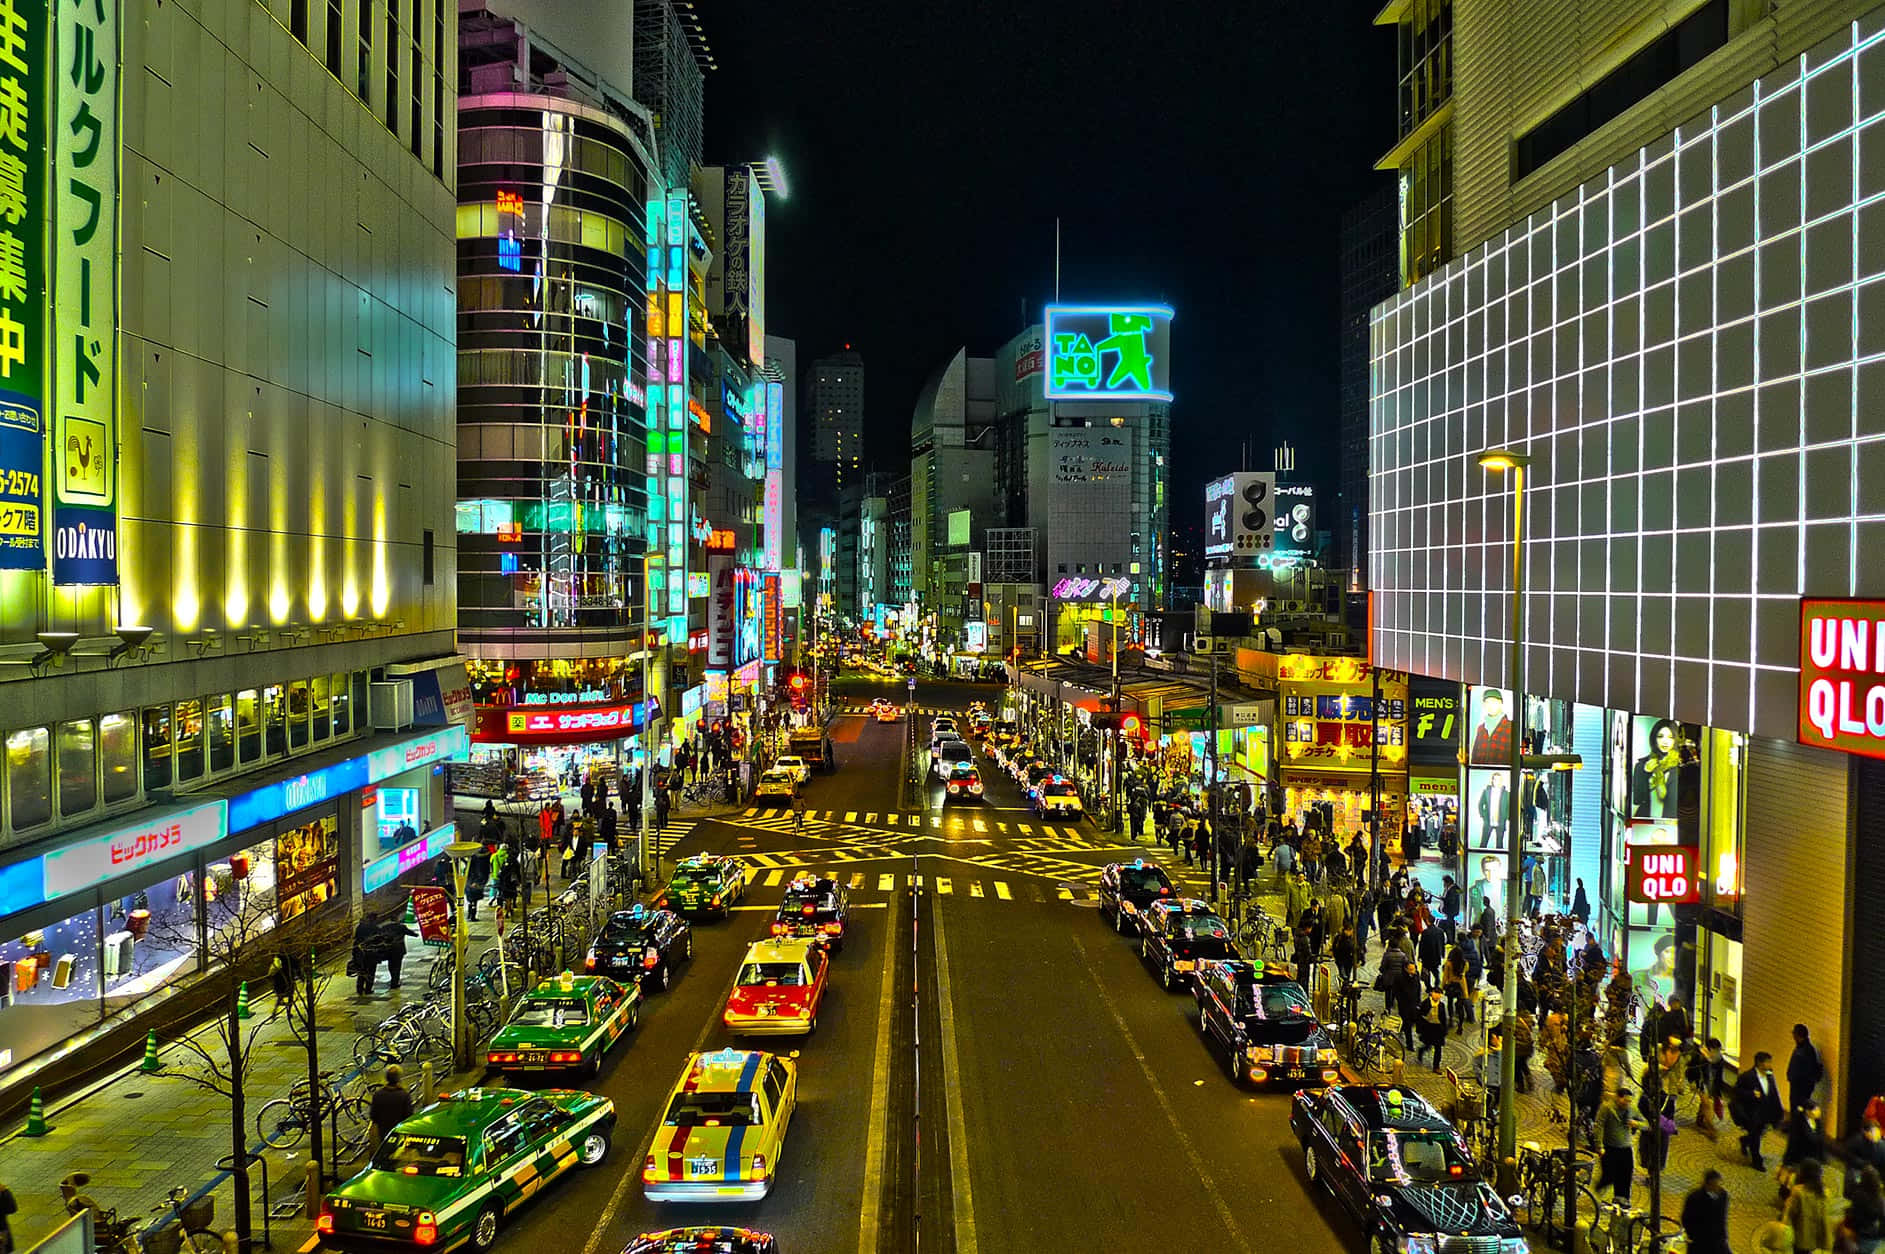 Grandeur of Tokyo at Night